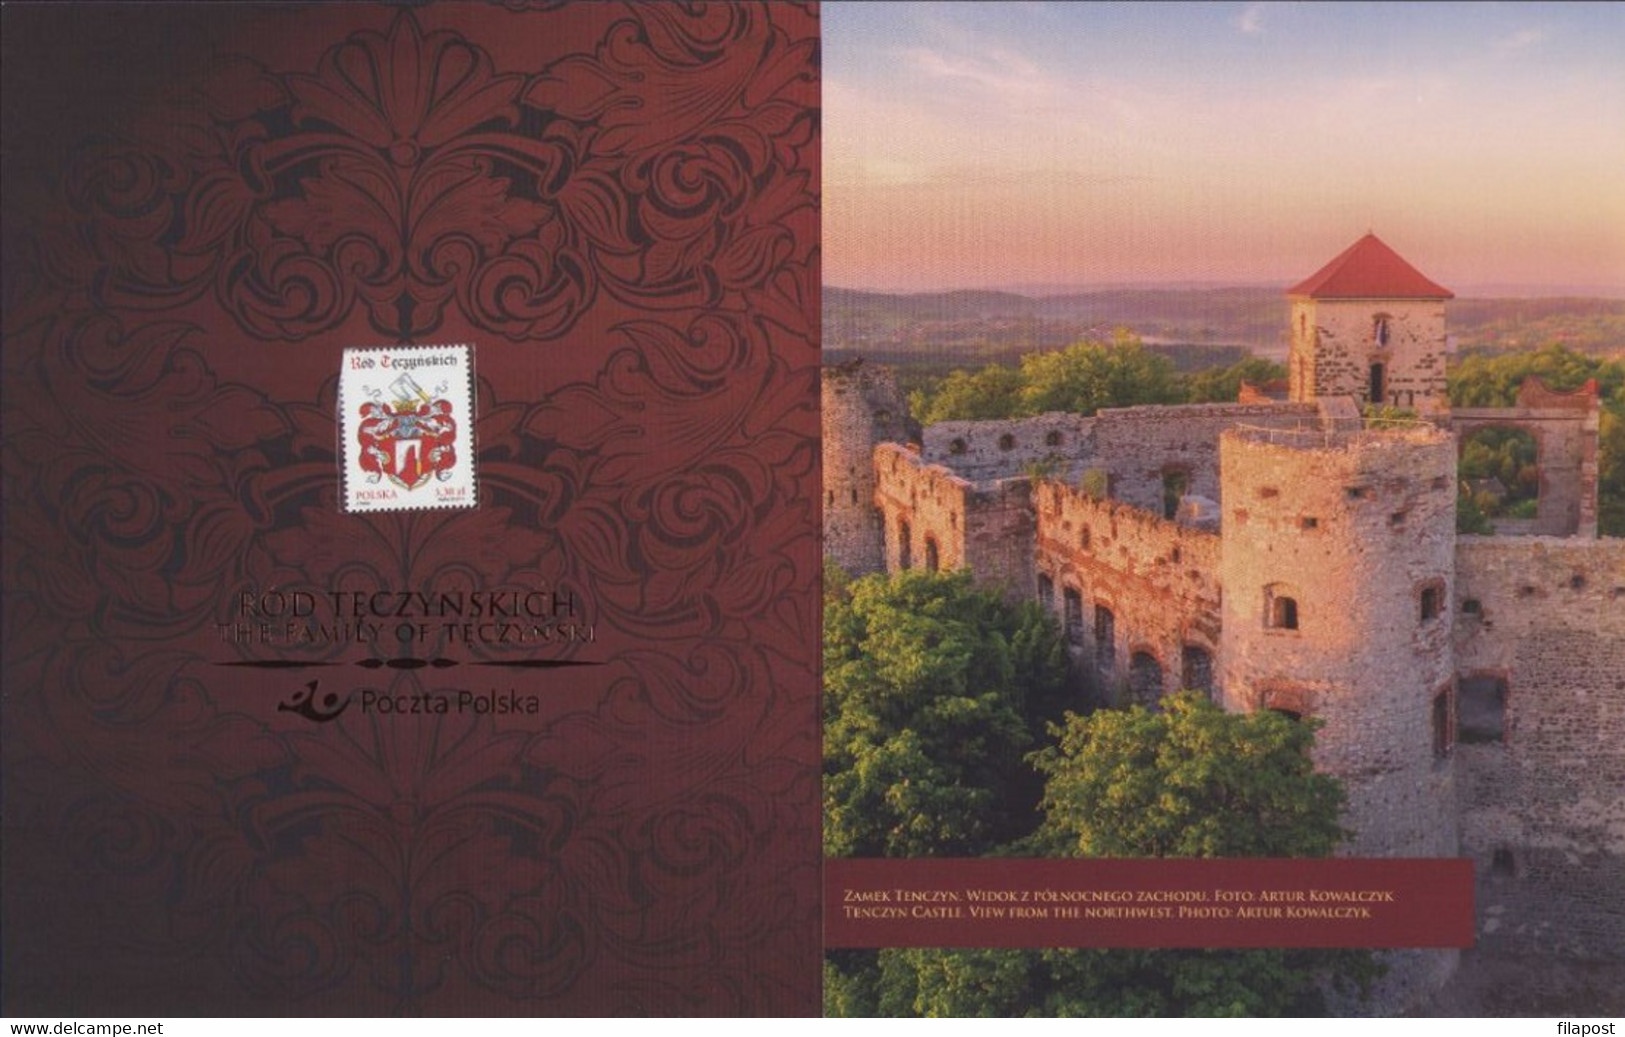 POLAND 2019 Booklet / The Family Of Teczynski, Kingdom Of Poland, Piast Dynasty, Jagiellon Dynasty / With Stamp MNH** - Libretti